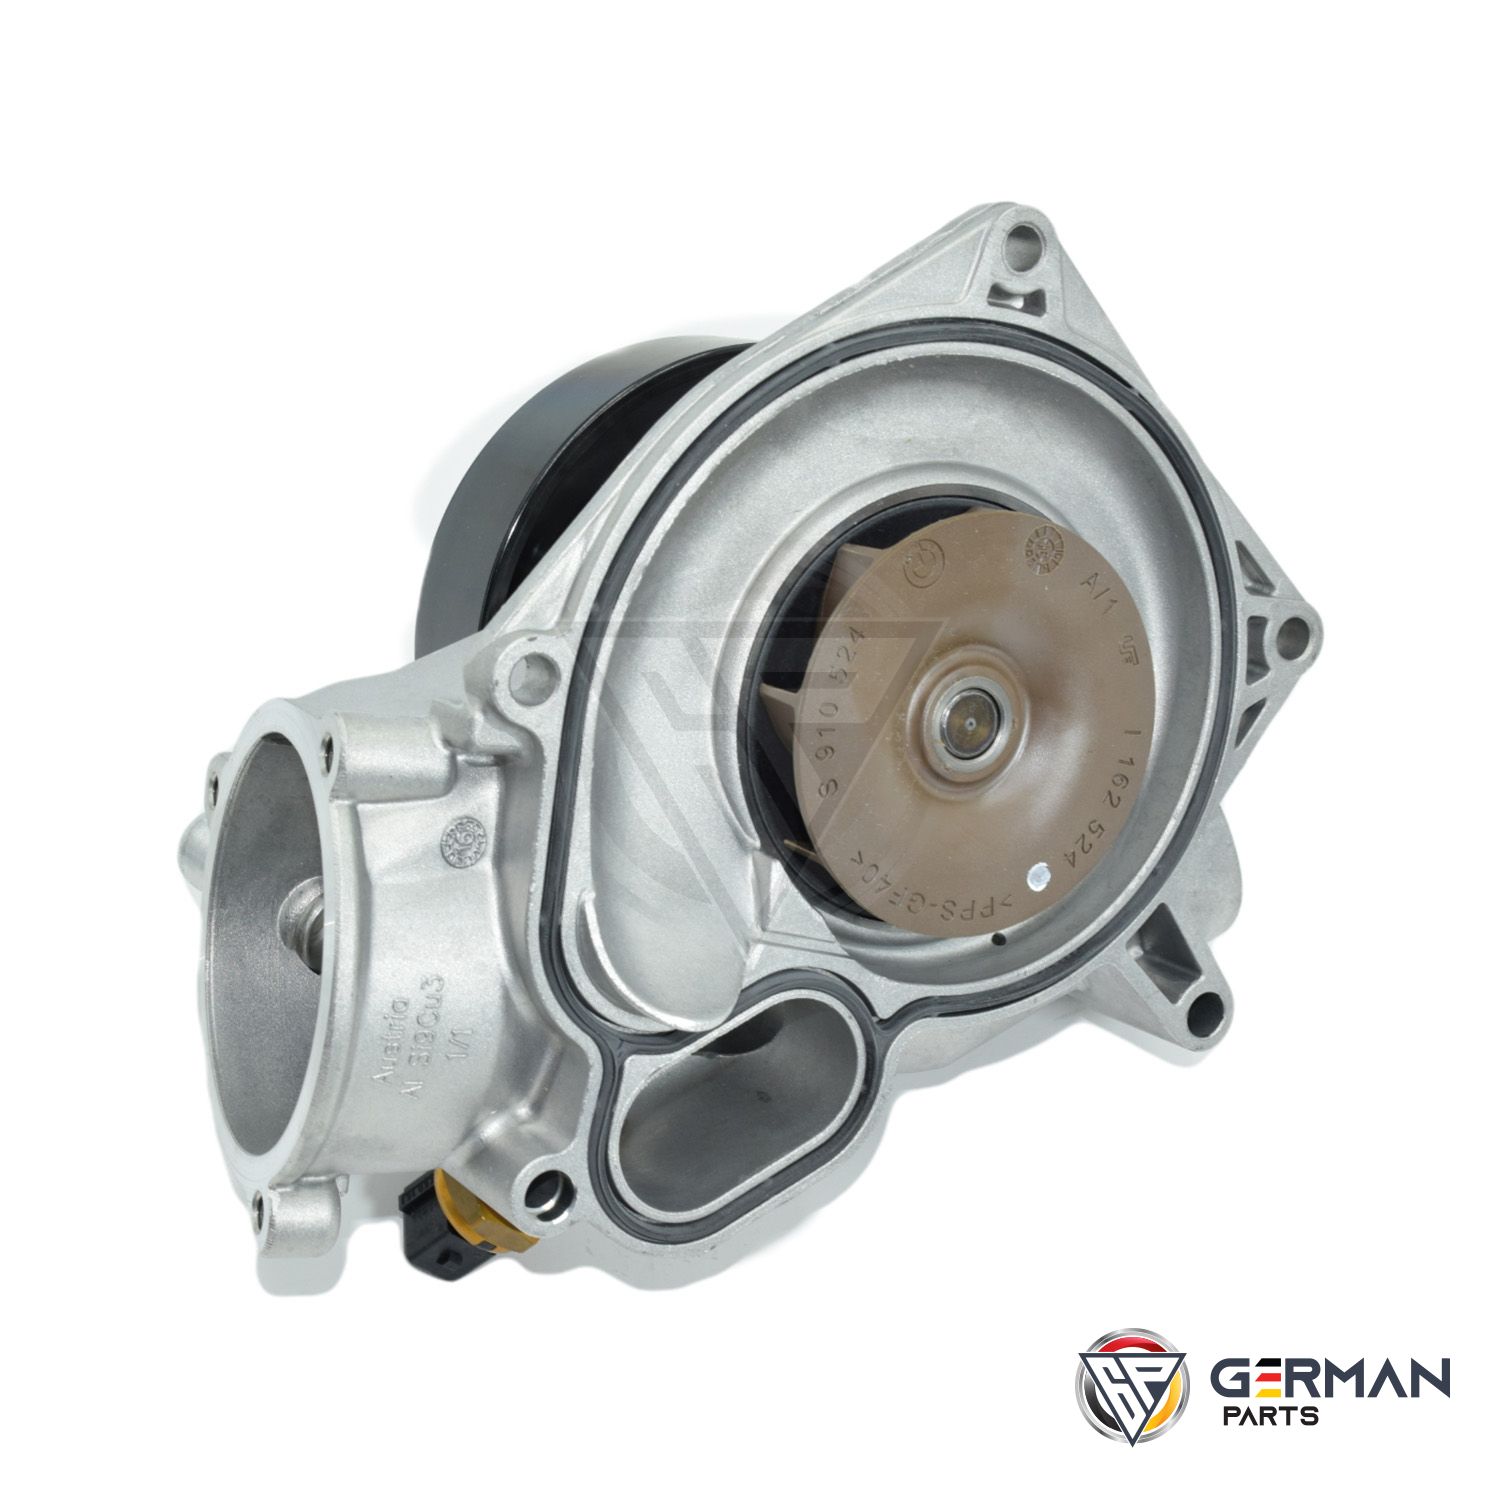 Buy BMW Water Pump 11517548263 - German Parts